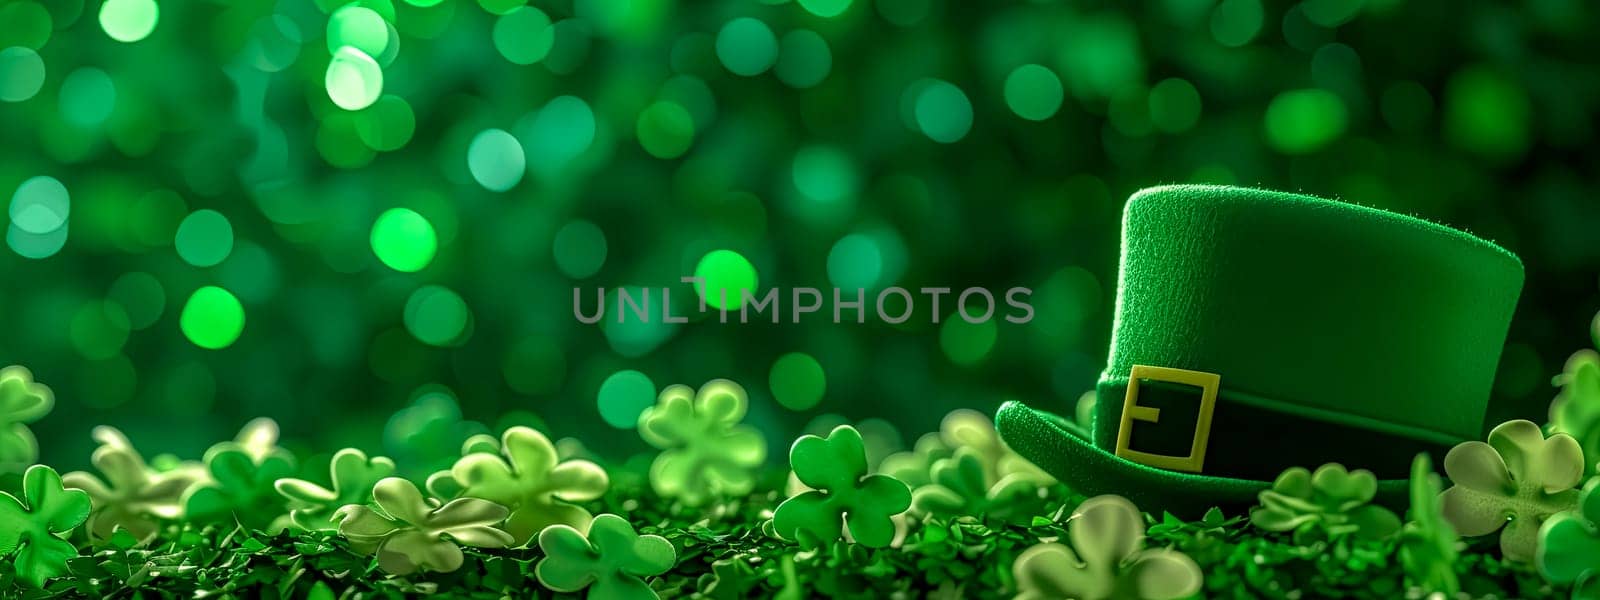 A green leprechaun hat amidst shamrocks, symbolizing luck and St. Patrick's Day by Edophoto